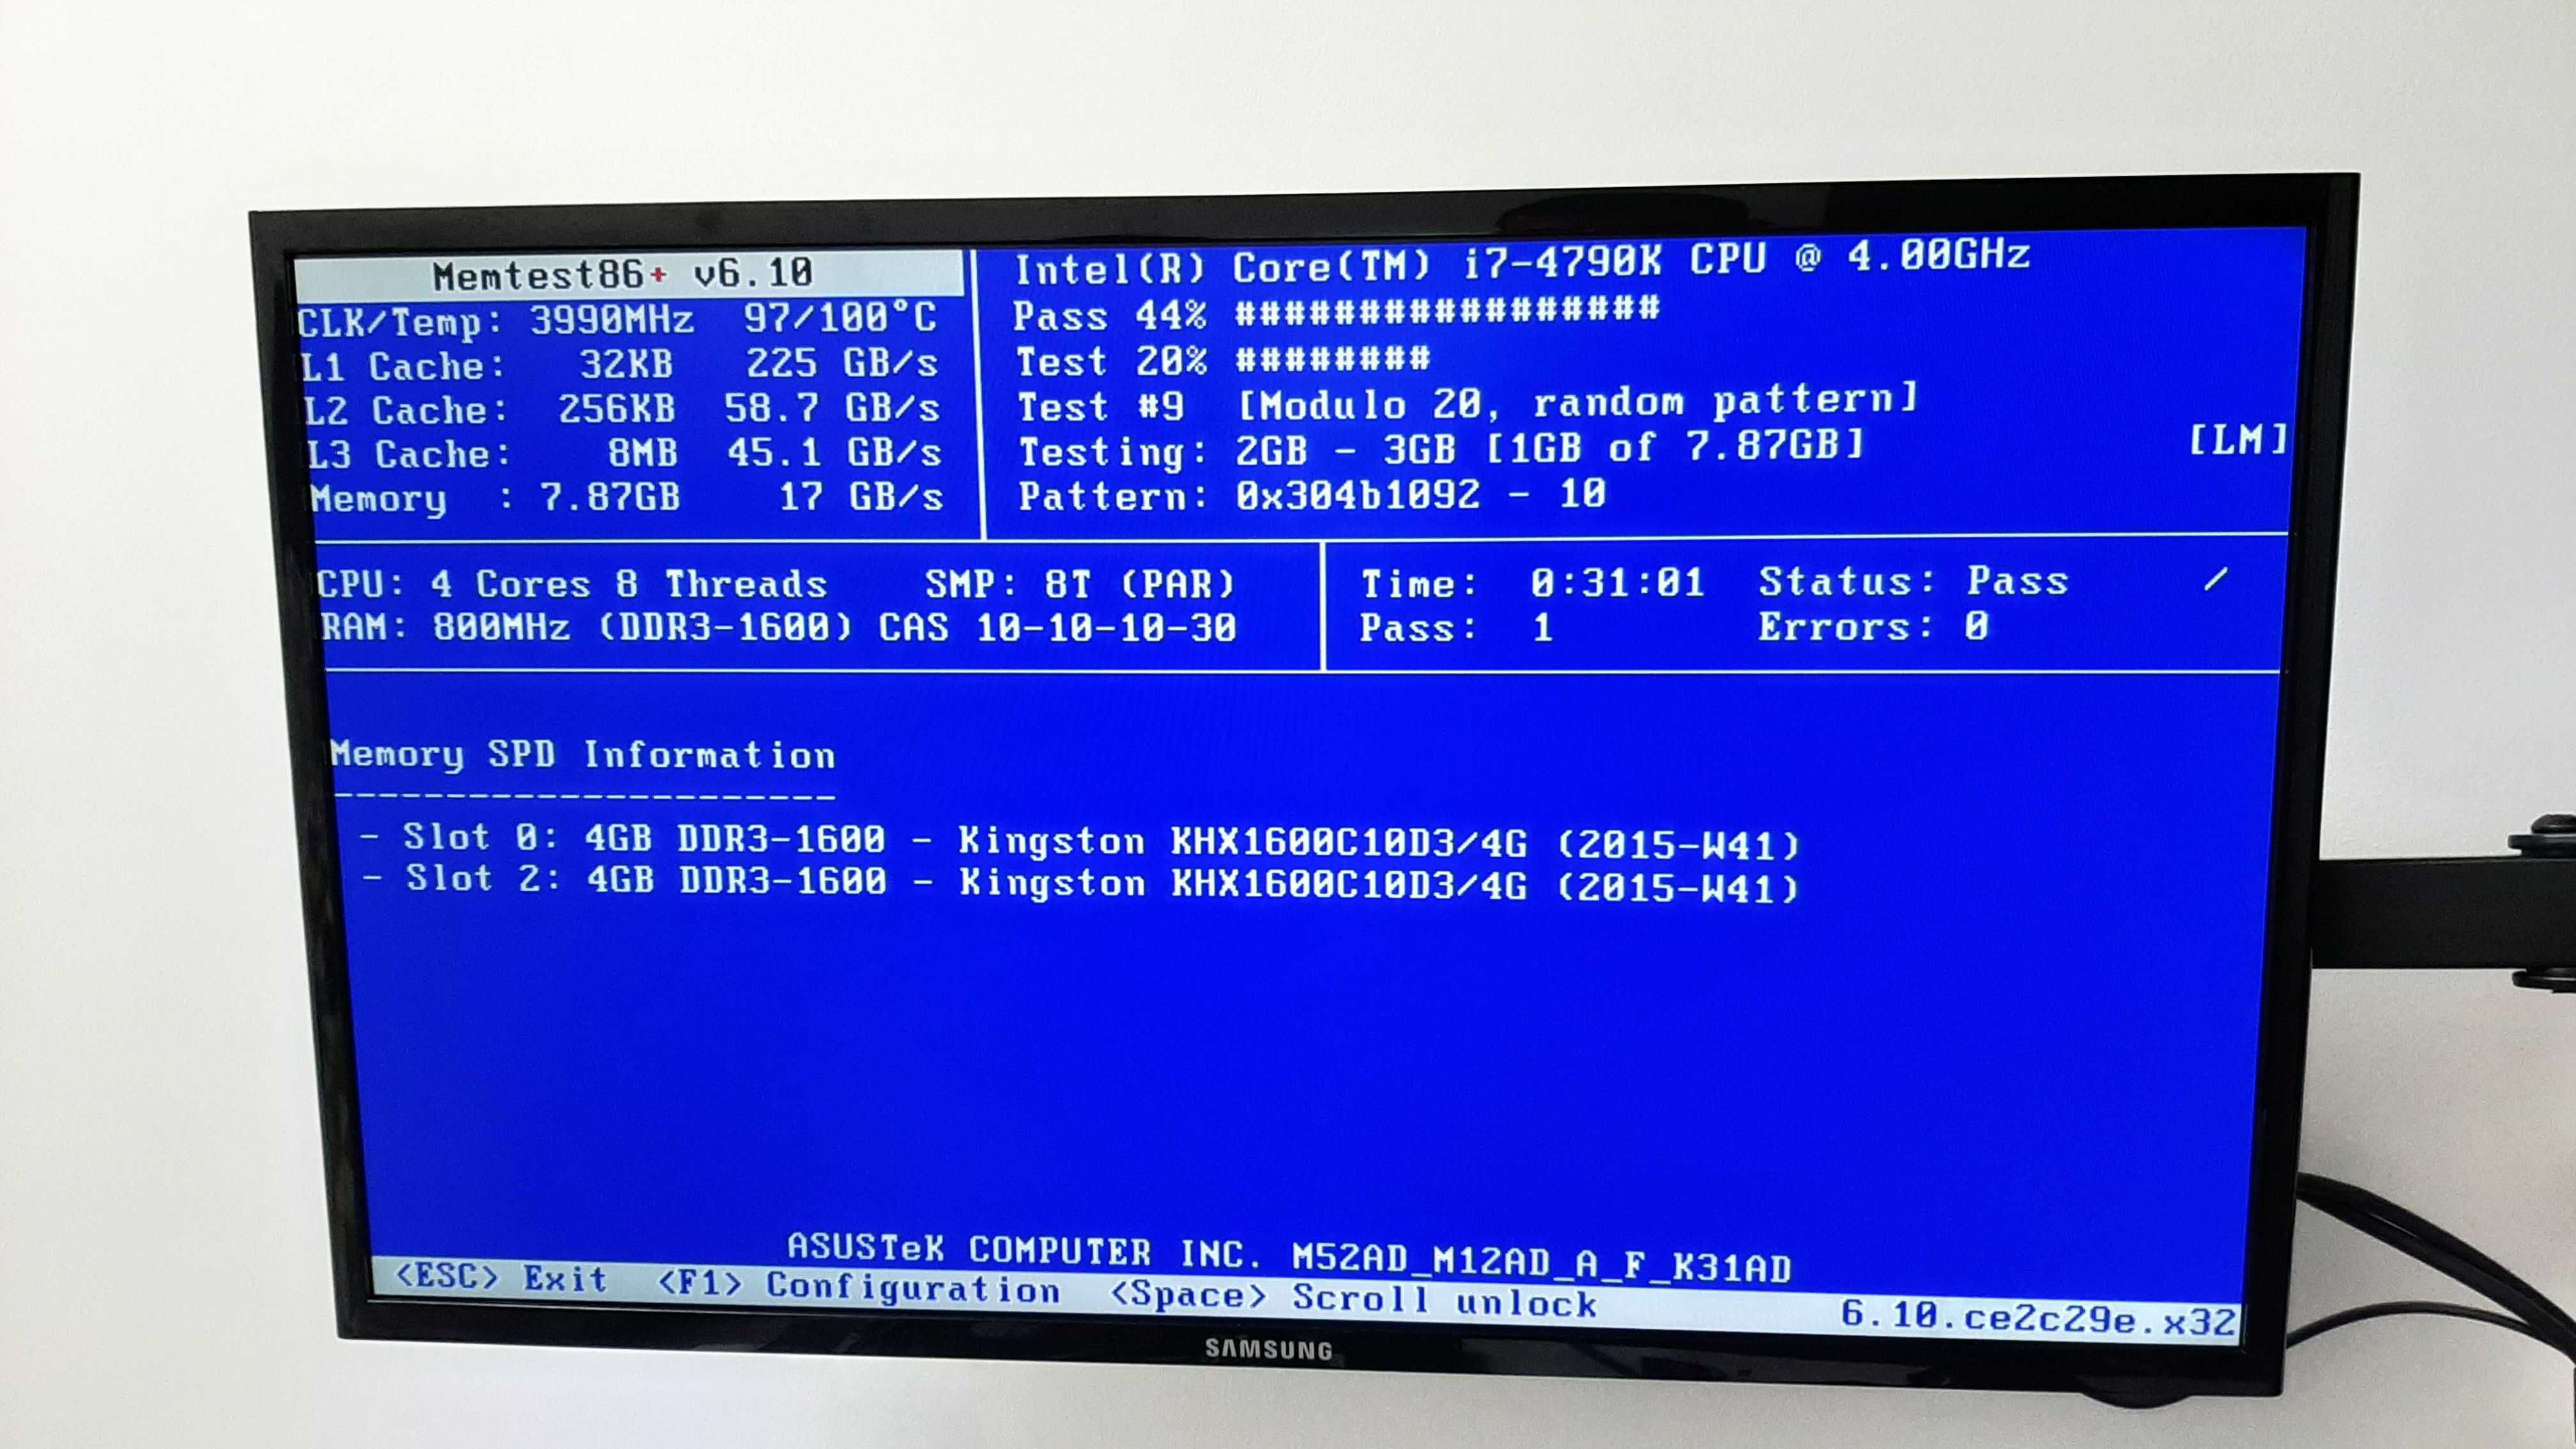 Kit memorii RAM PC 8Gb DDR3 1600Mhz(2x4Gb) Kingston HyperX Fury